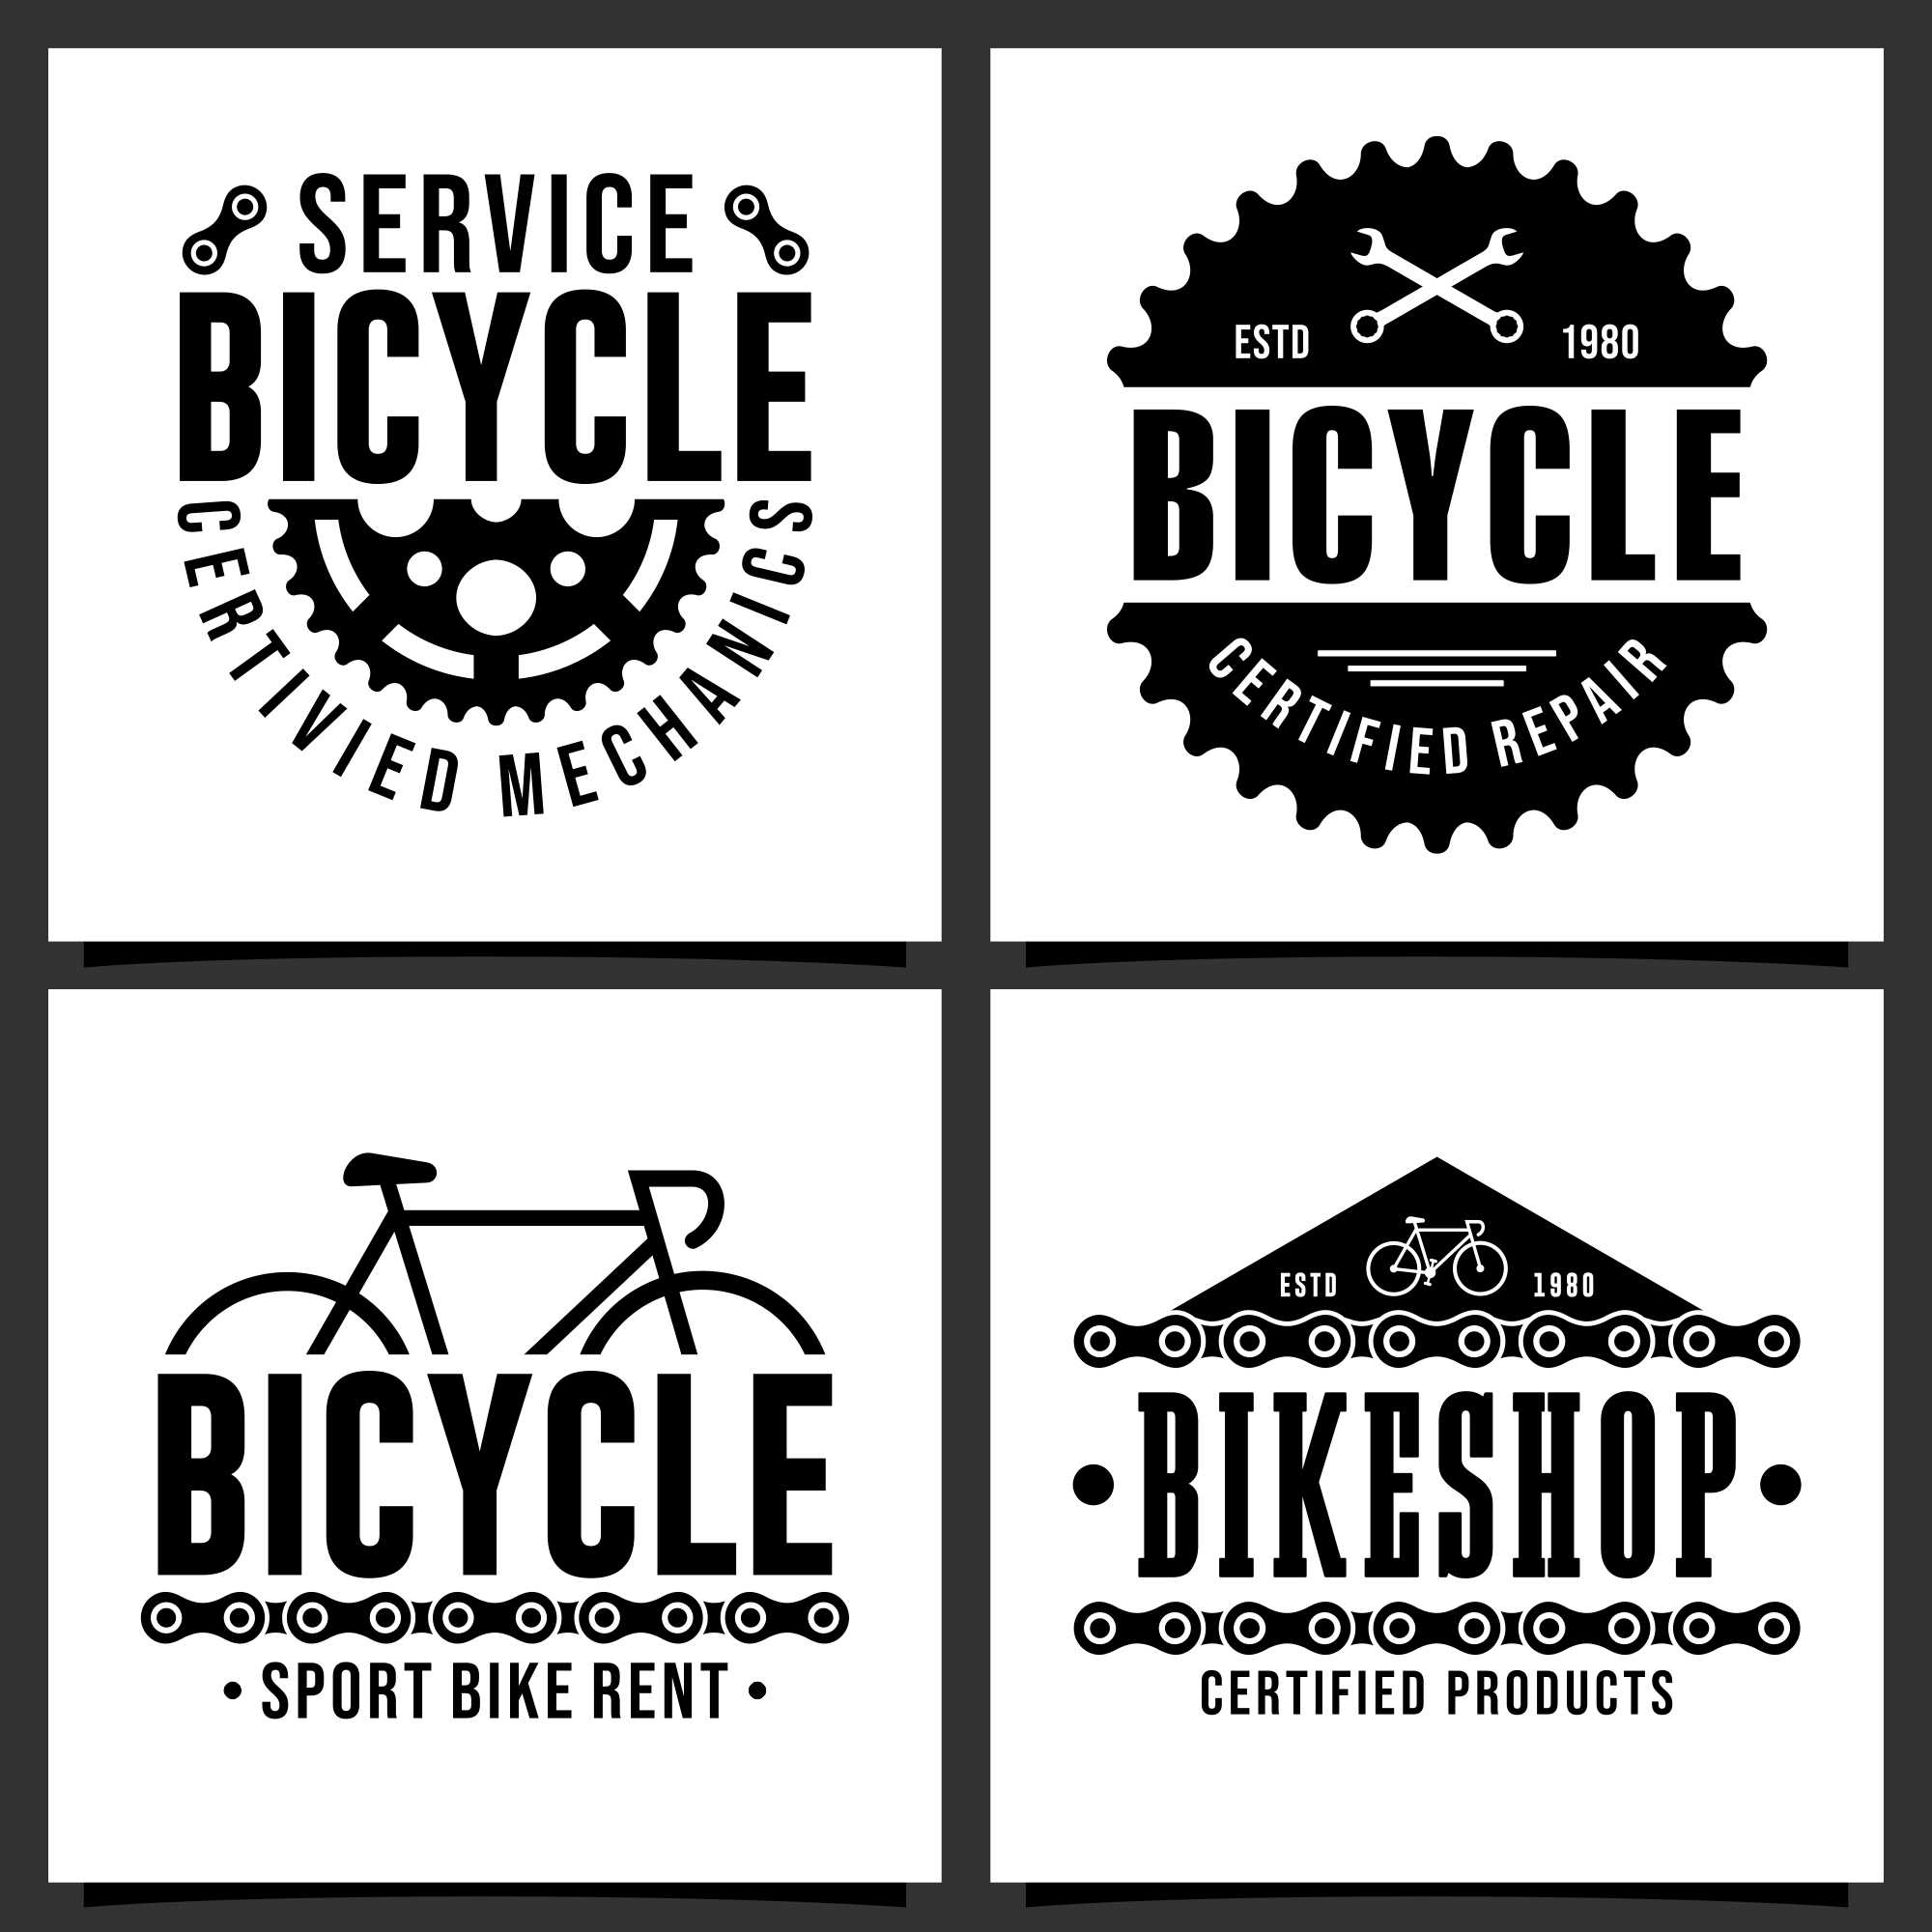 Bicycle repair service logo Royalty Free Vector Image